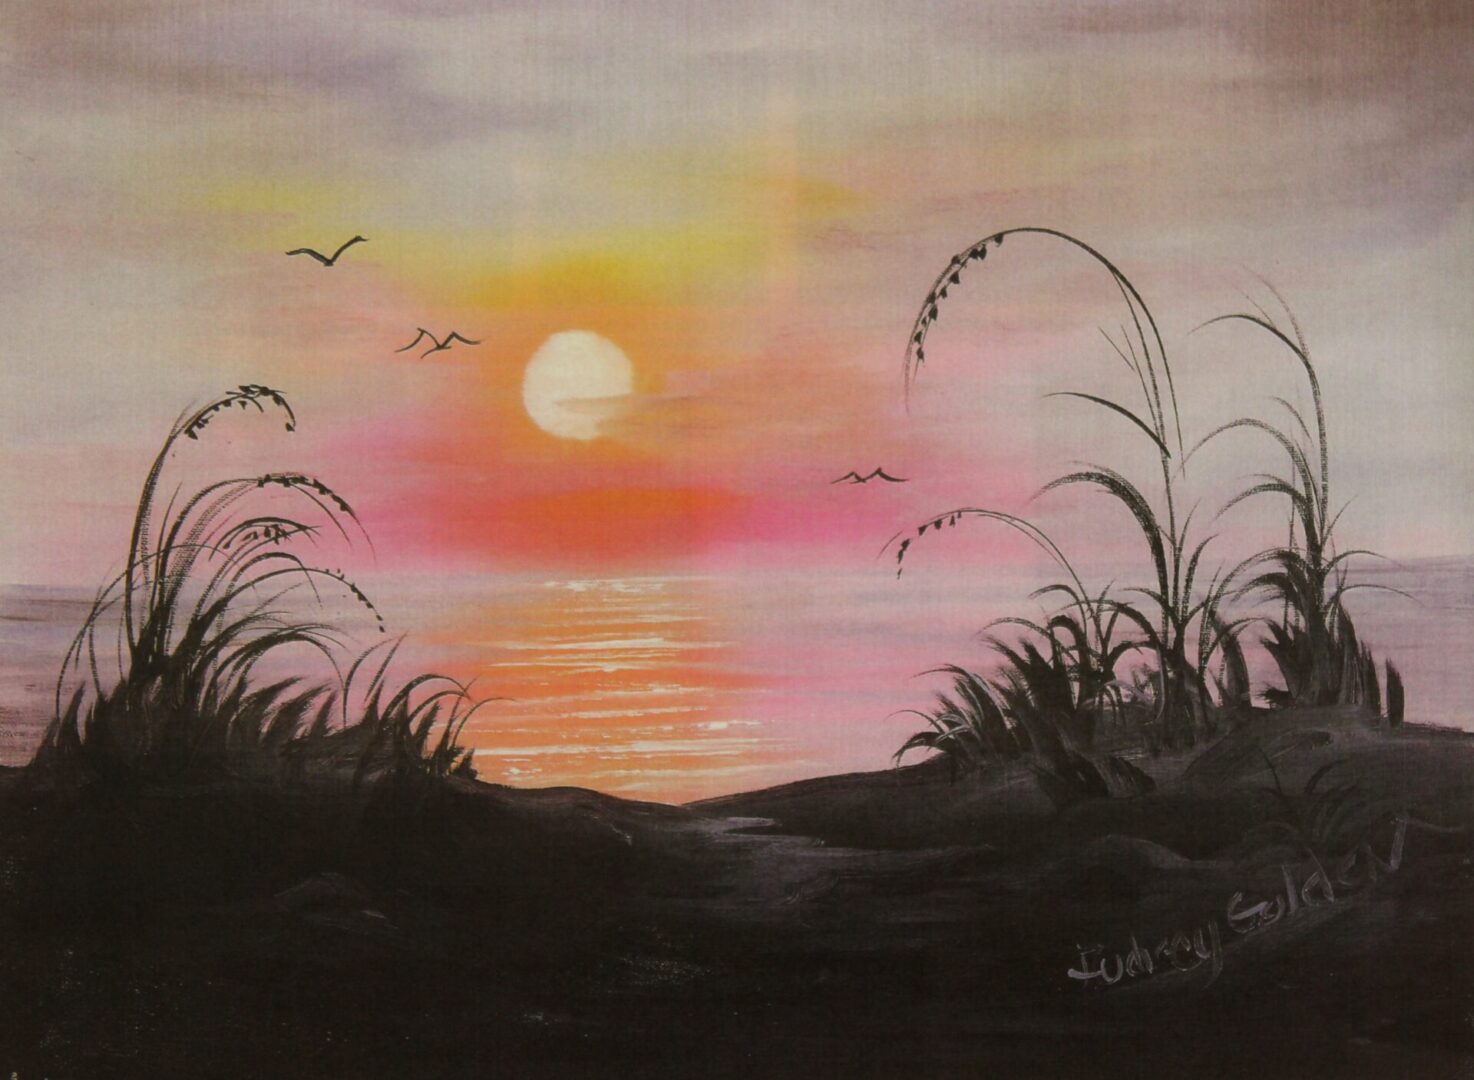 A beautiful sunrise painting